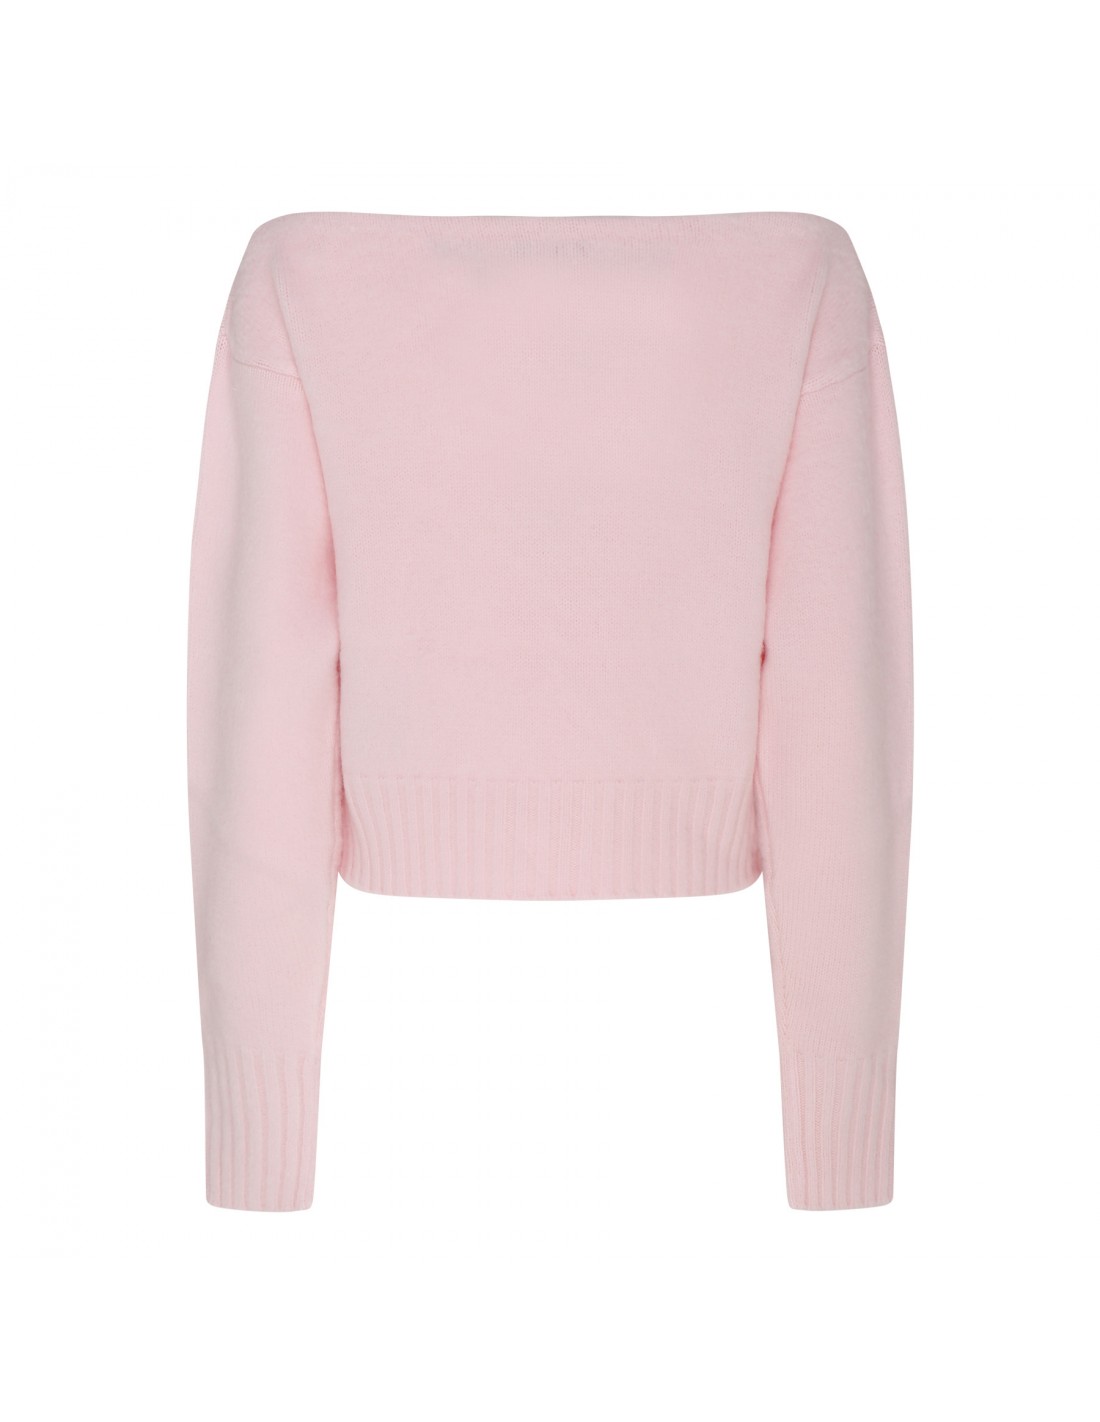 Pink brush wool blend sweater